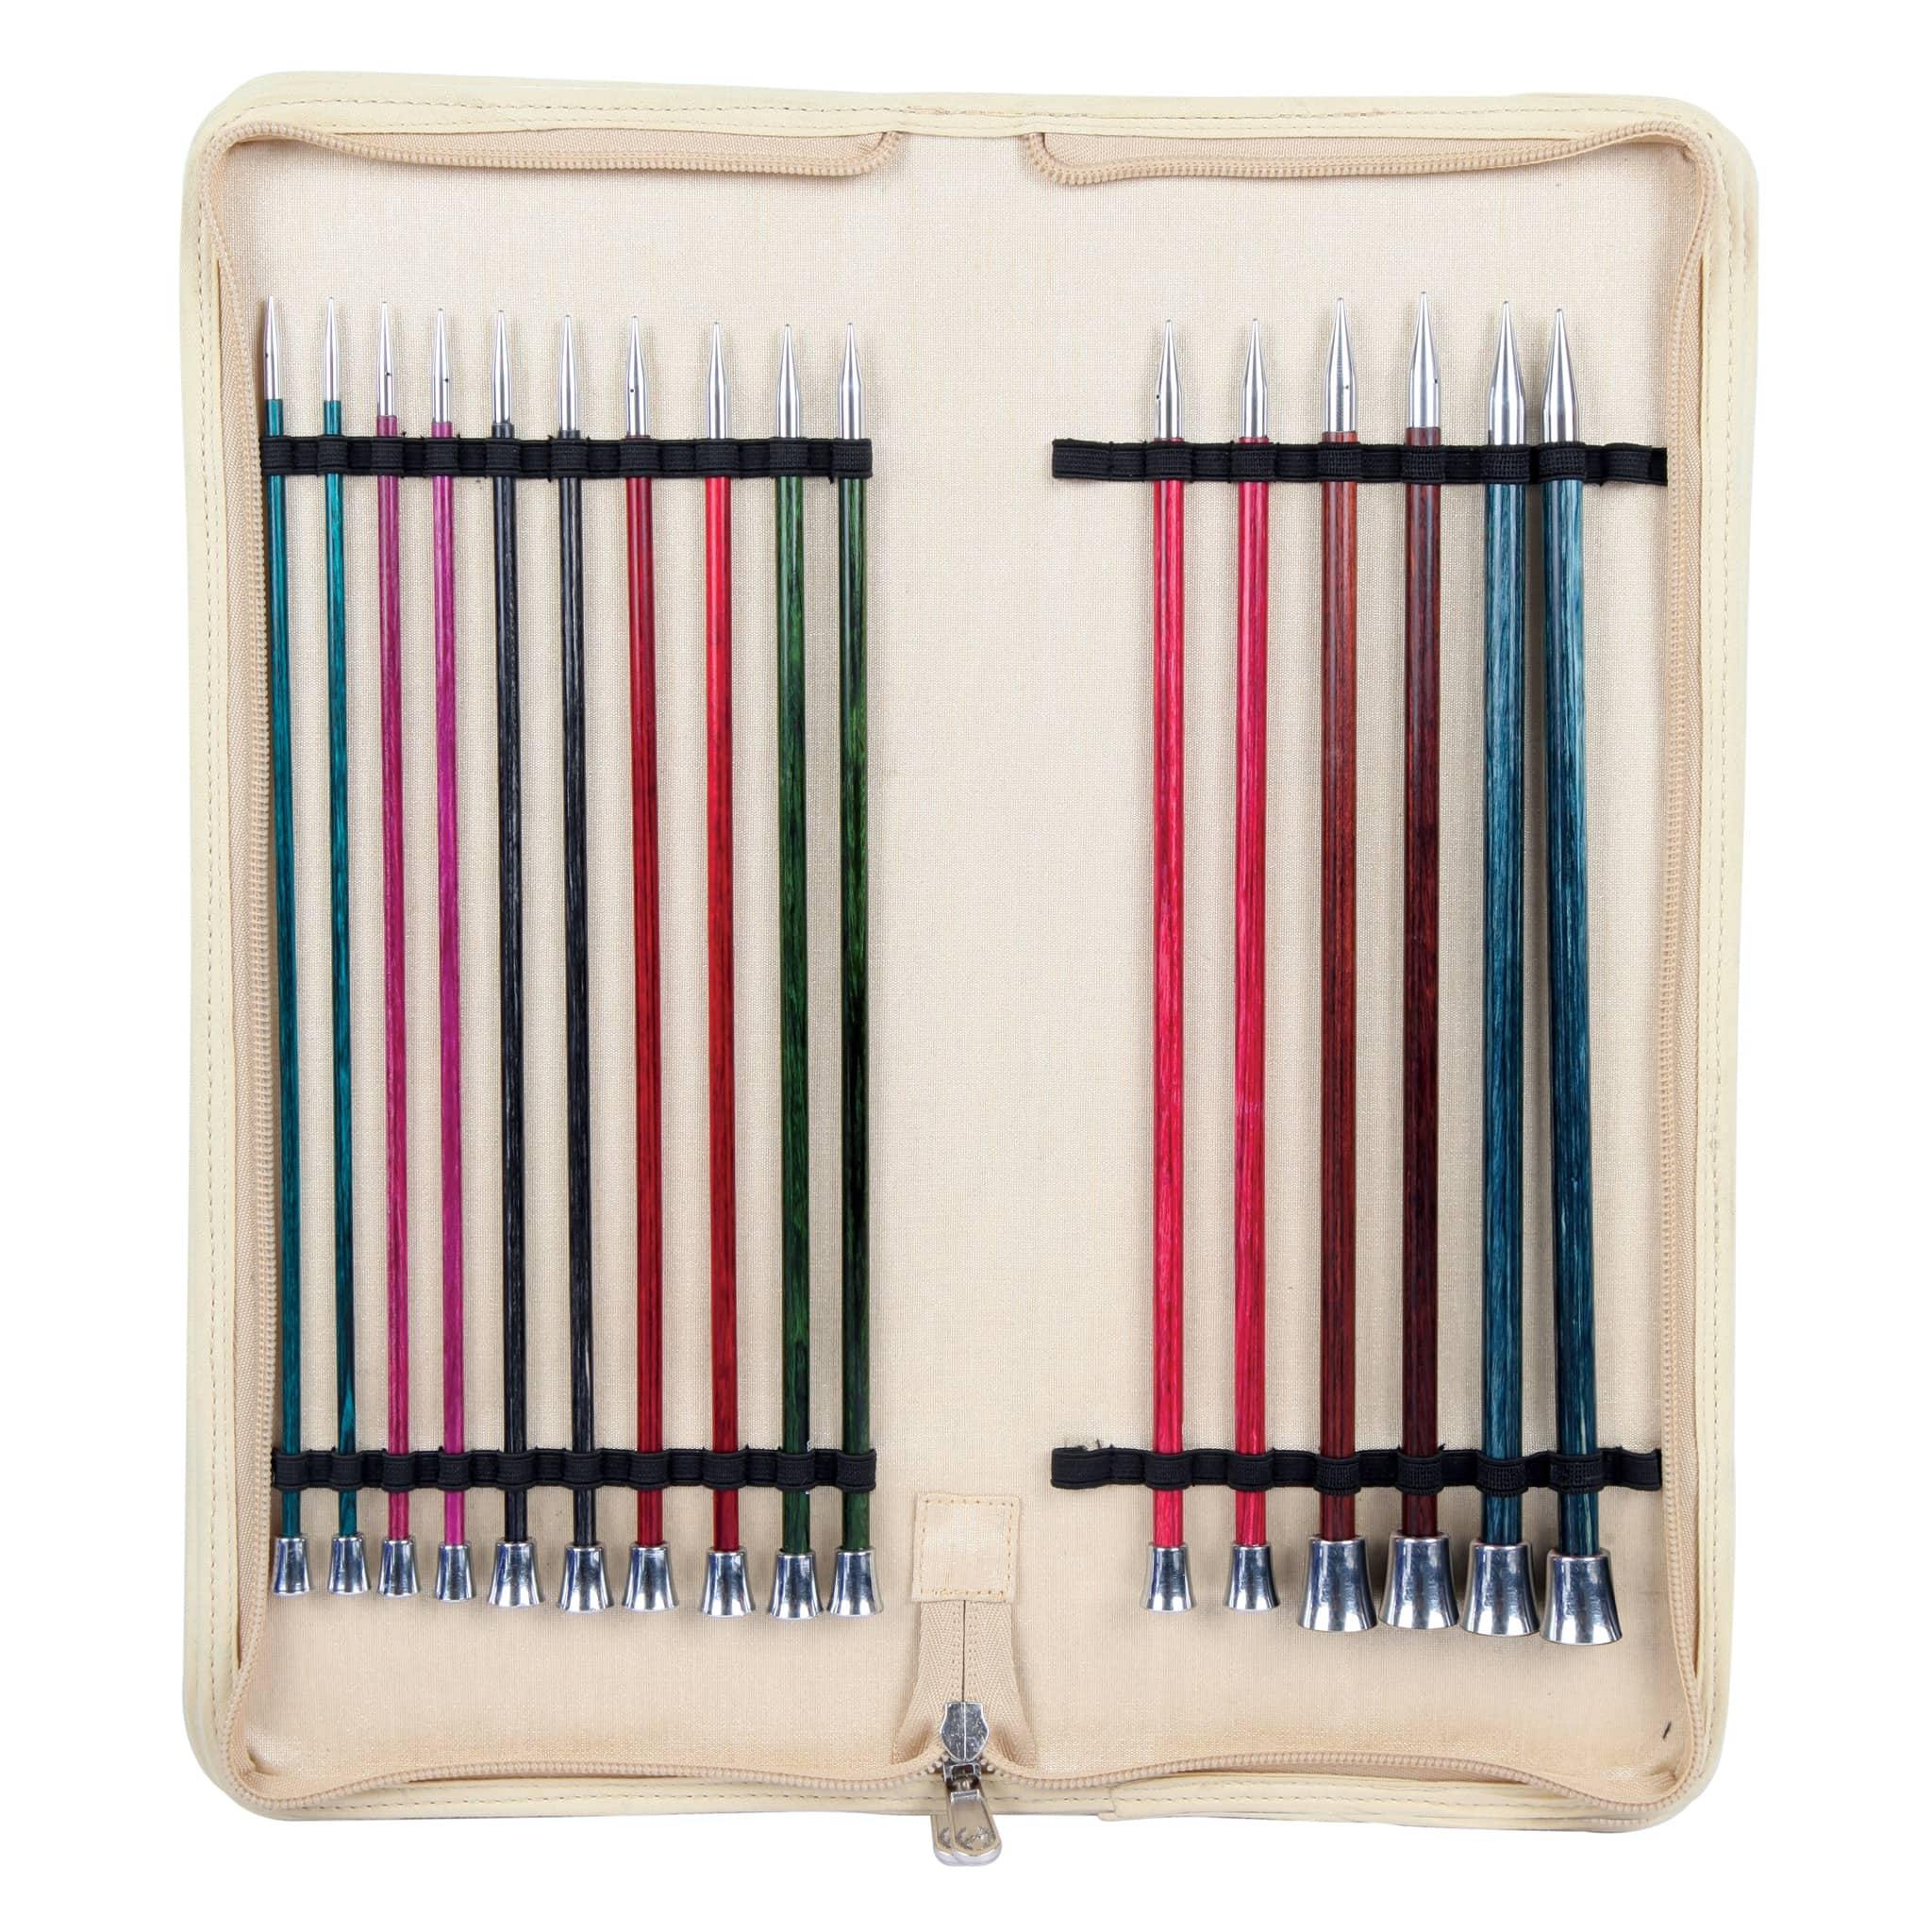 Knitpro Royale Knitting Pins - Single Ended Set - Woolshop.co.uk